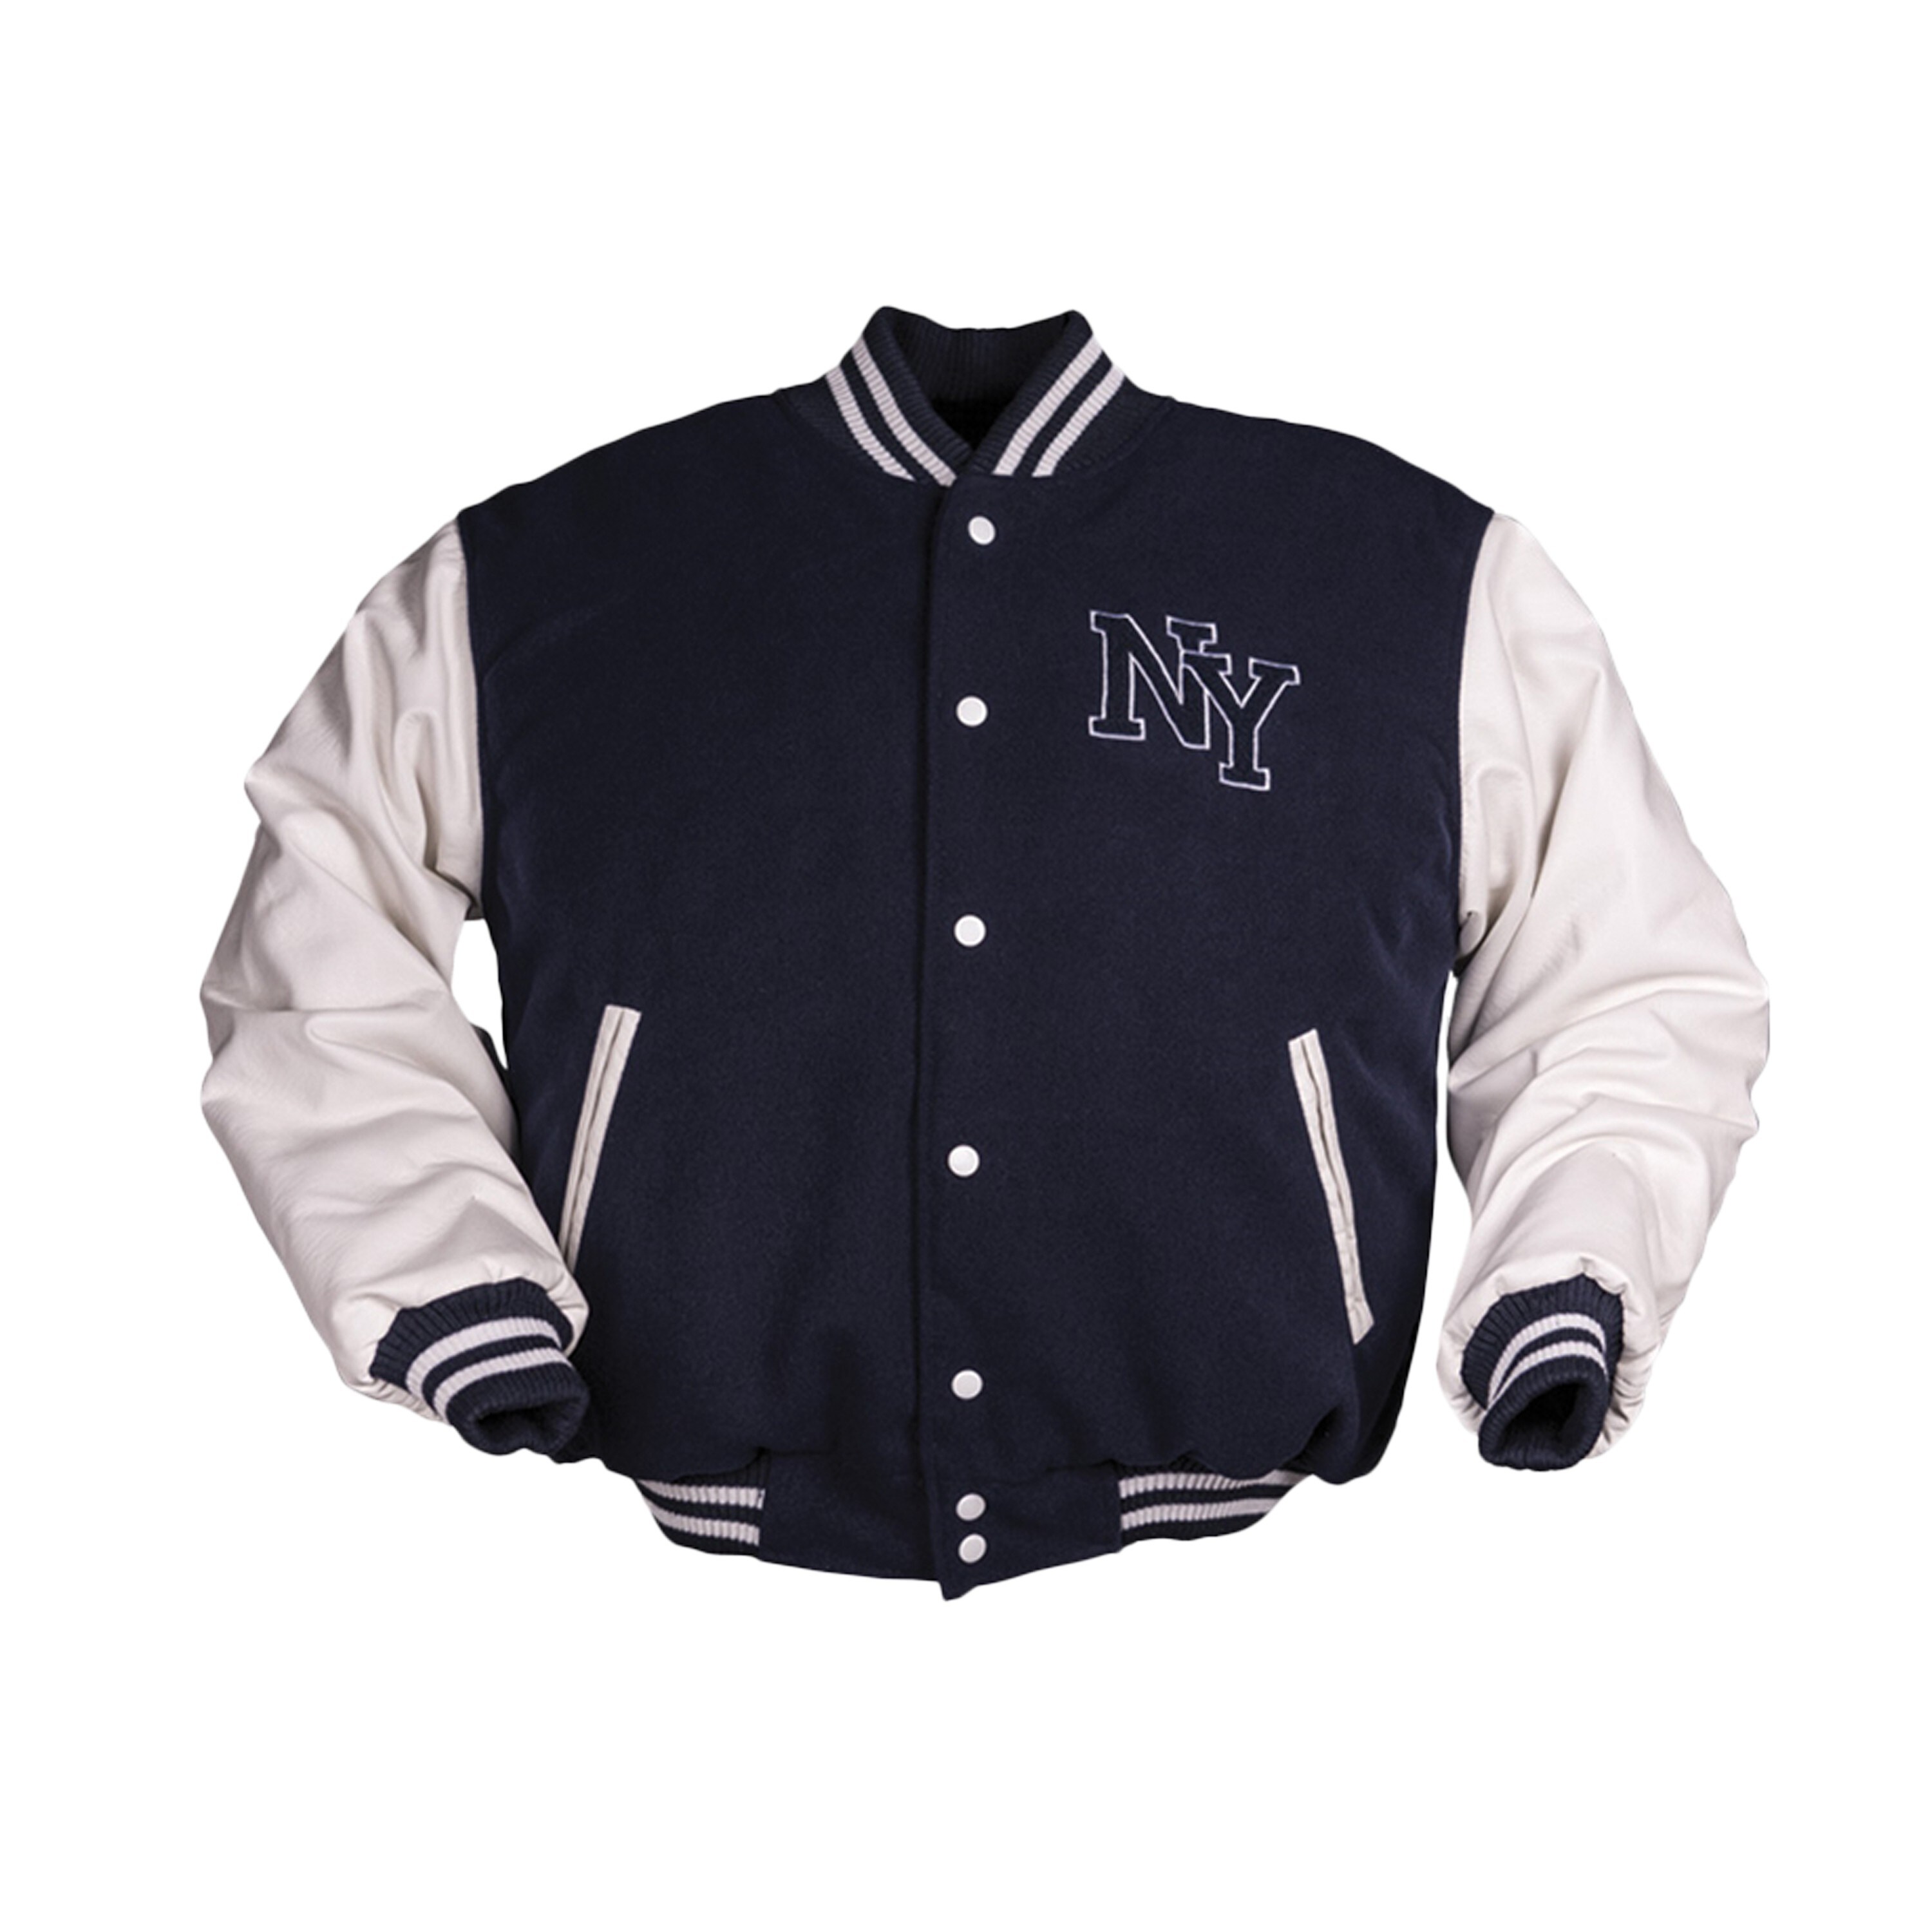 NUOVO Ny Baseball giacca con patch Nero/Bianco & Navy/Bianco Tg s-3xl 